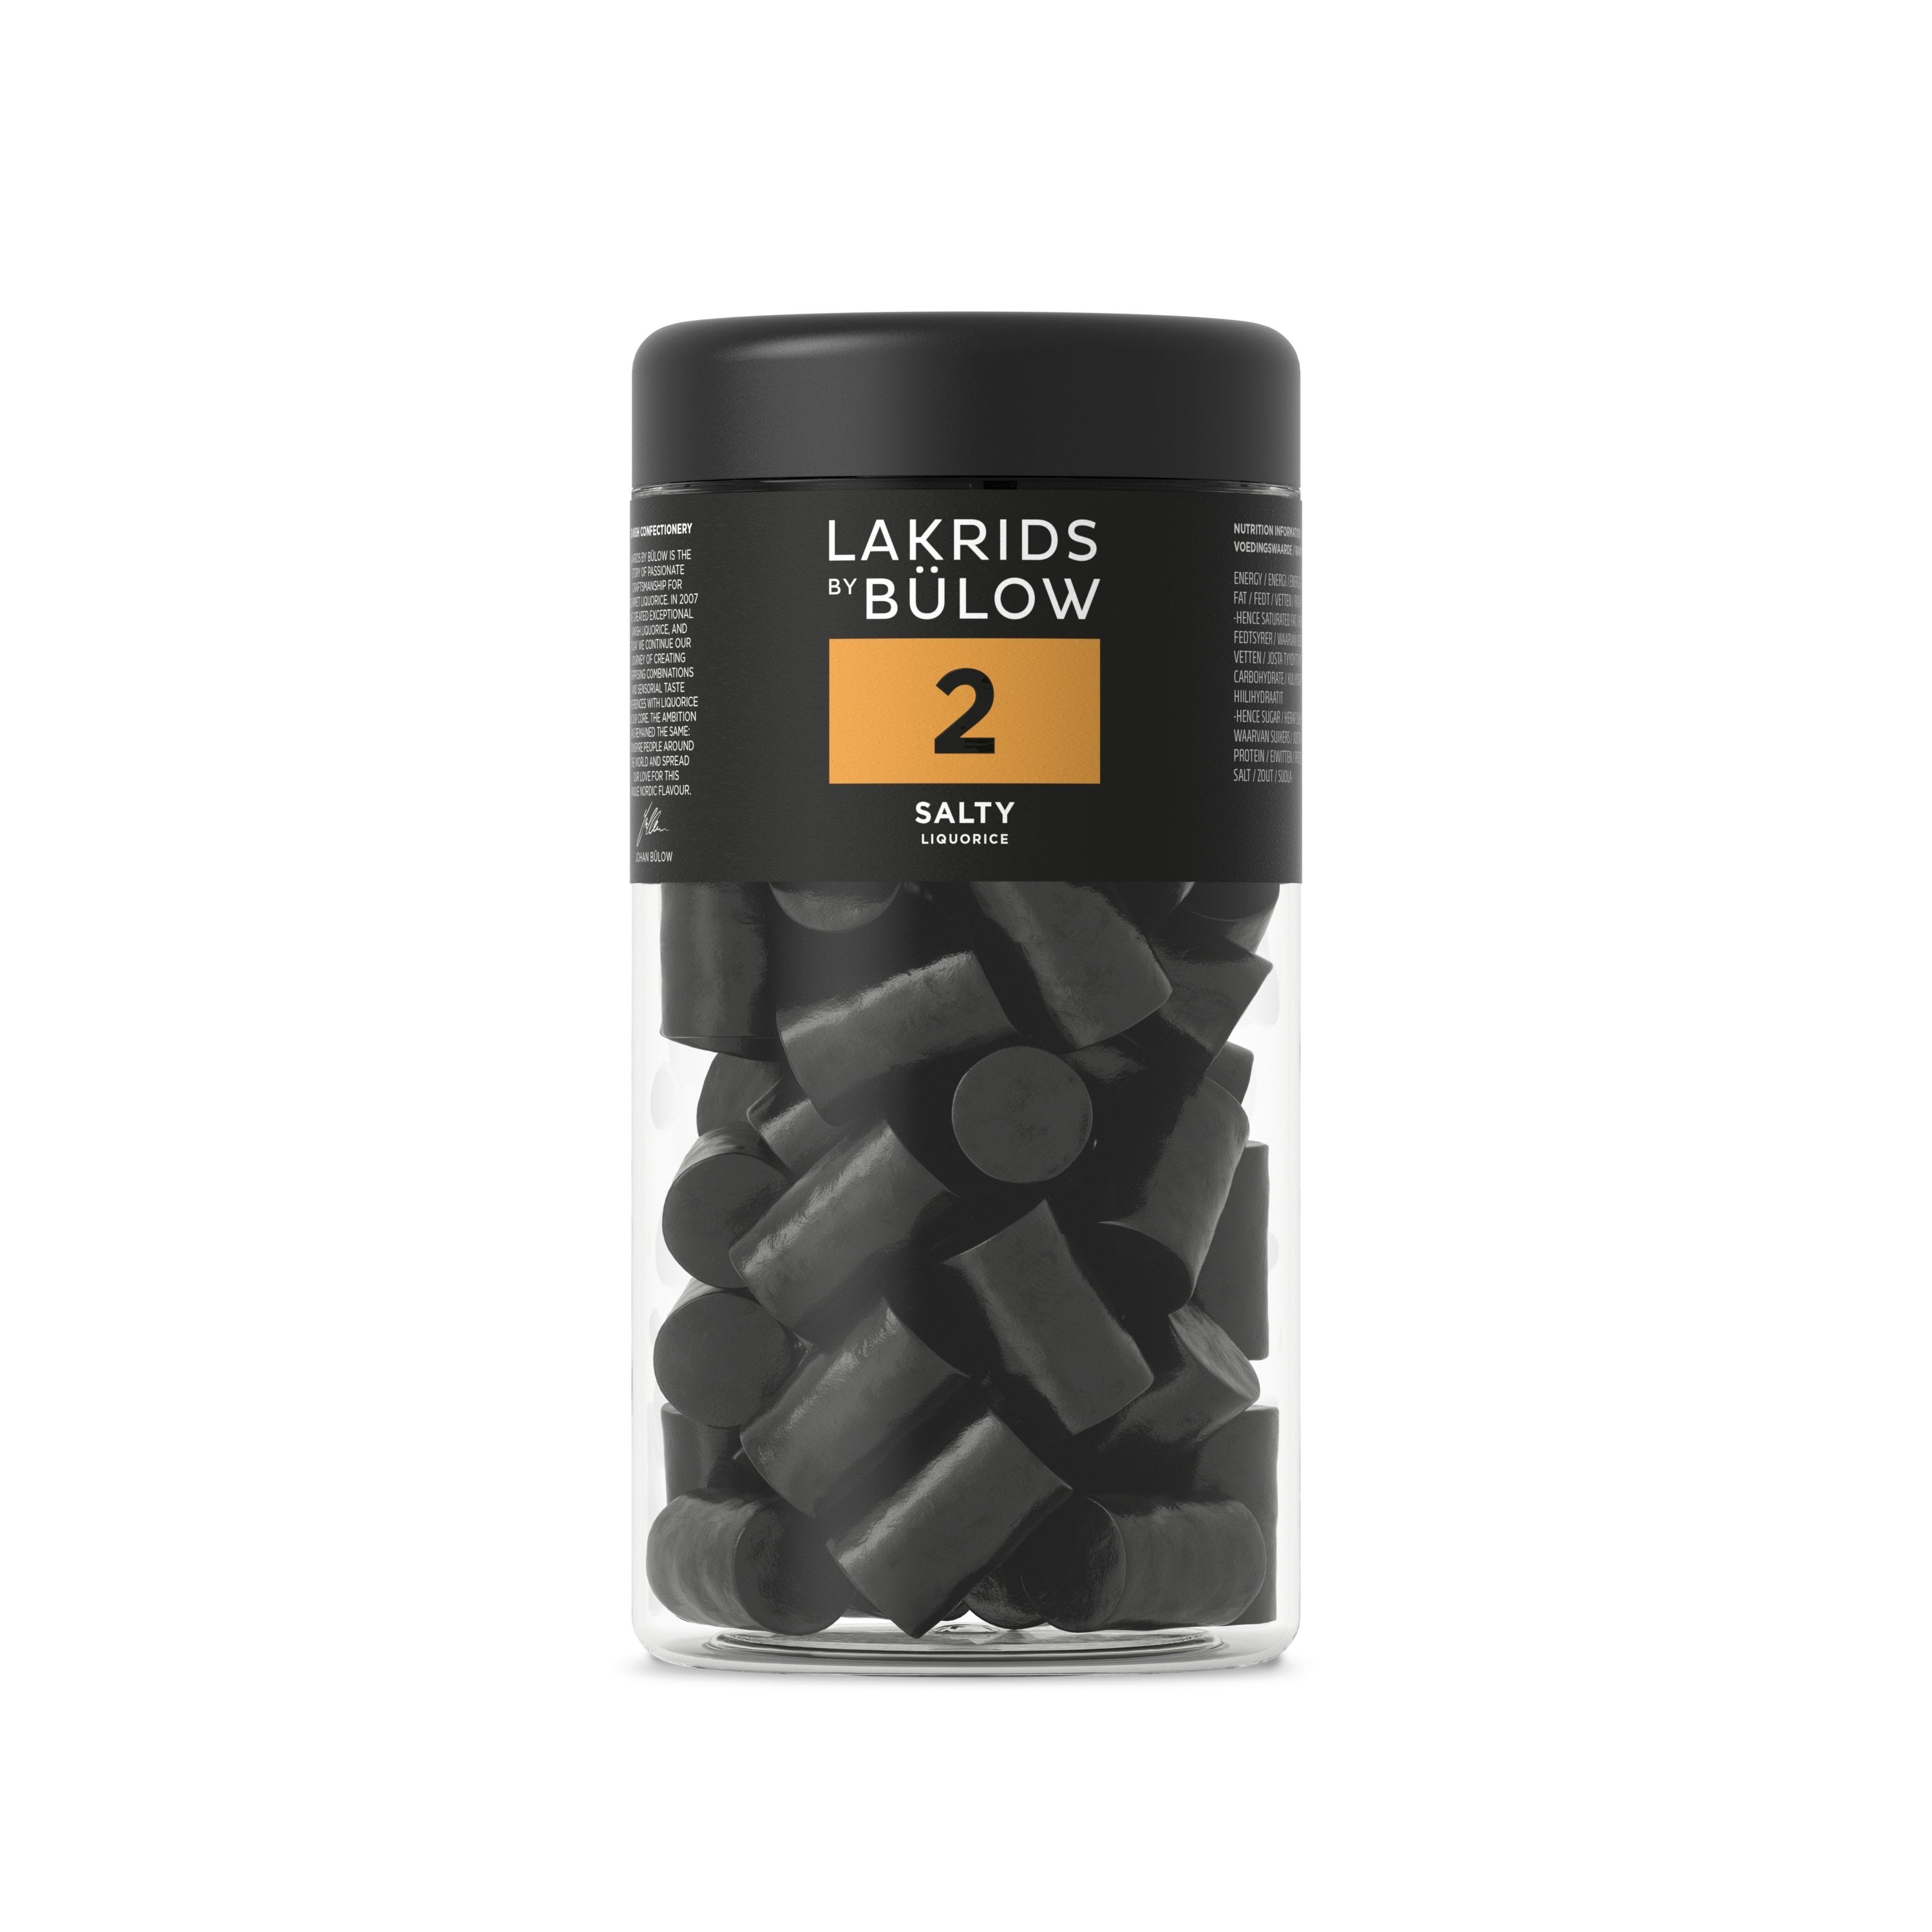 Lakrids by Bülow 2-Salty, 360 Gram